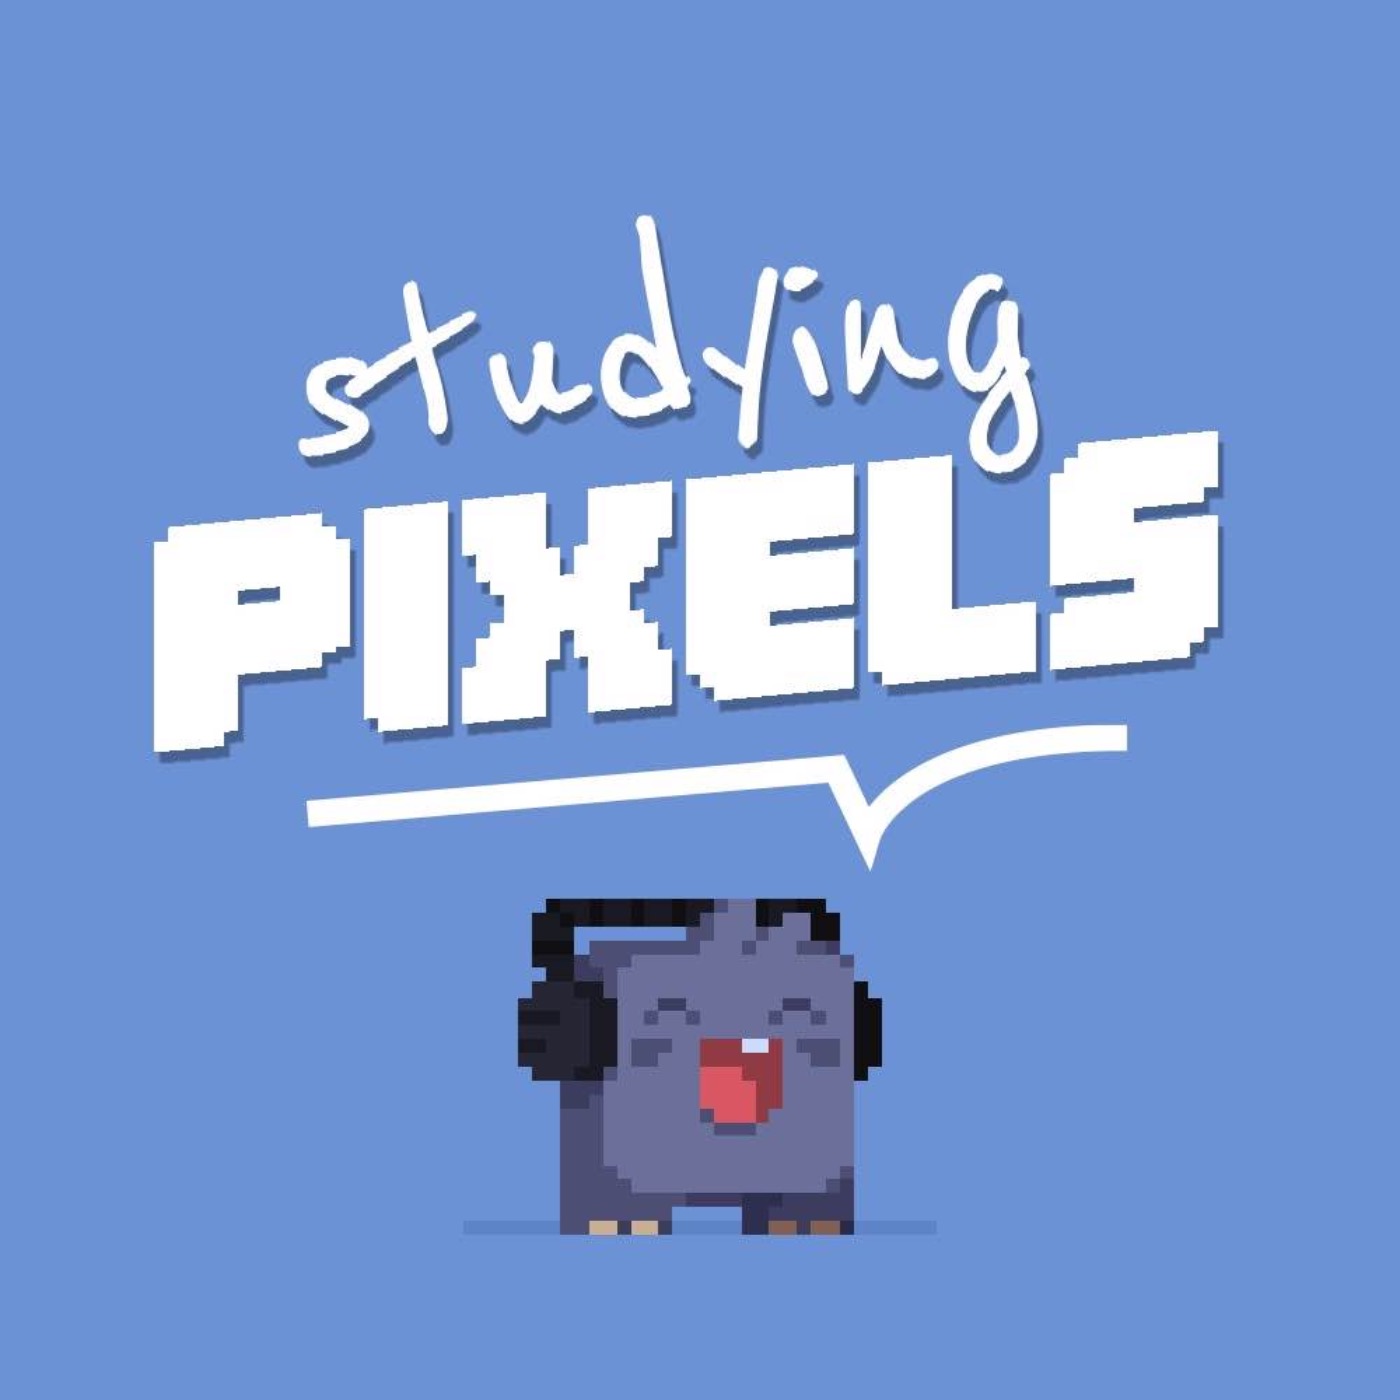 Studying Pixels is taking a hiatus